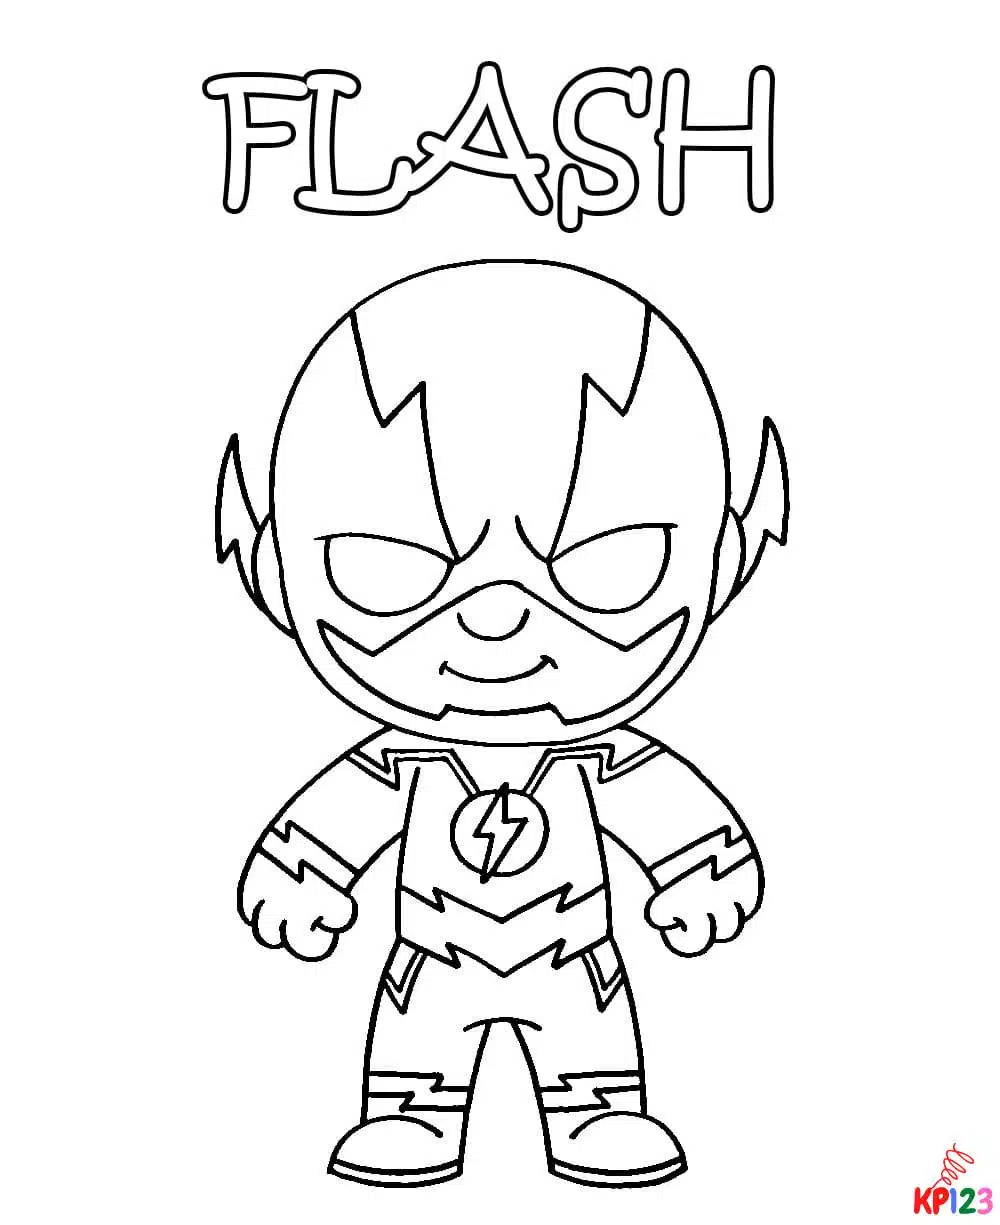 The Flash 5